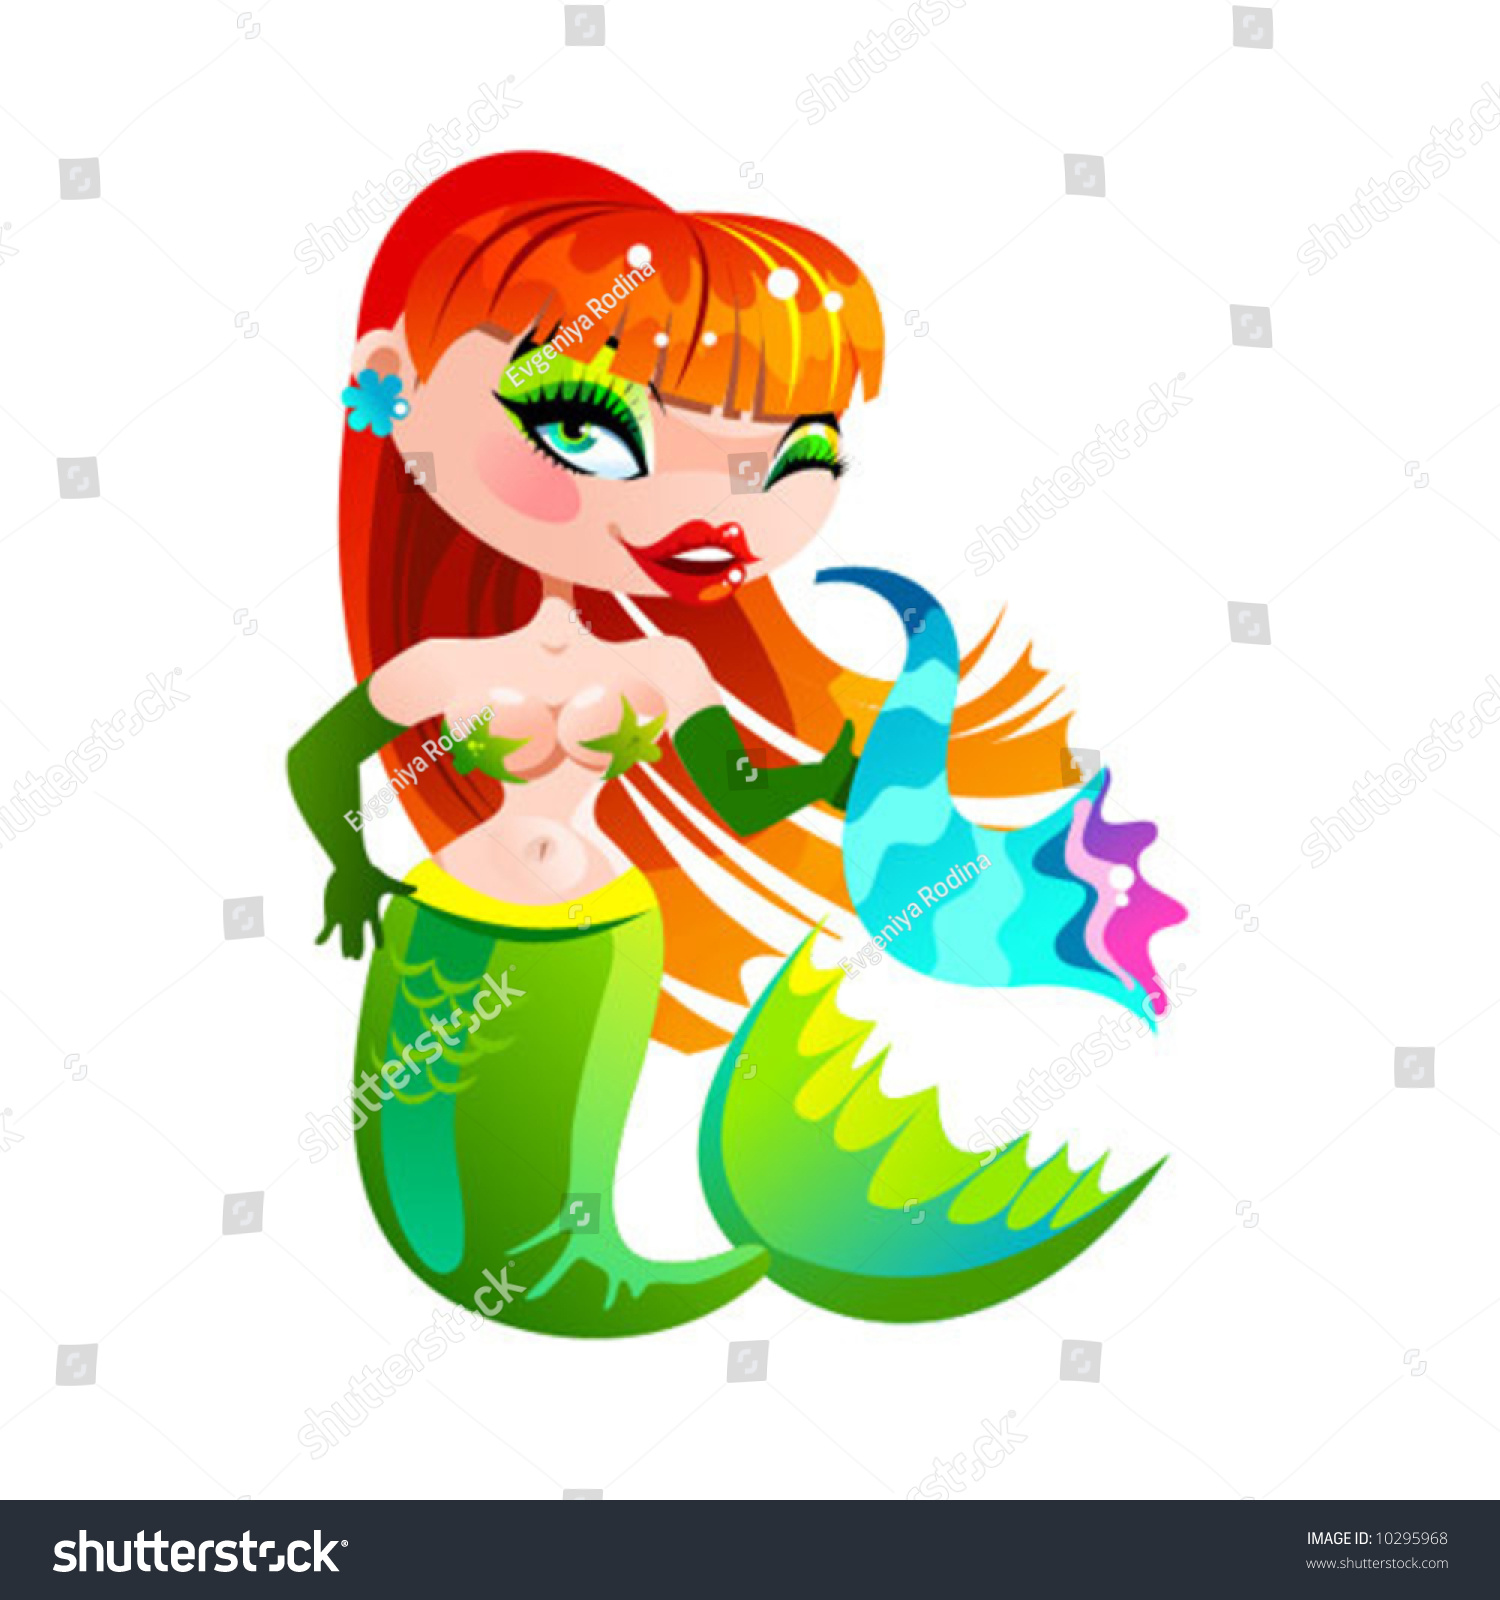 Green Mermaid Green Tail Blue Shell Stock Vector 10295968 - Shutterstock